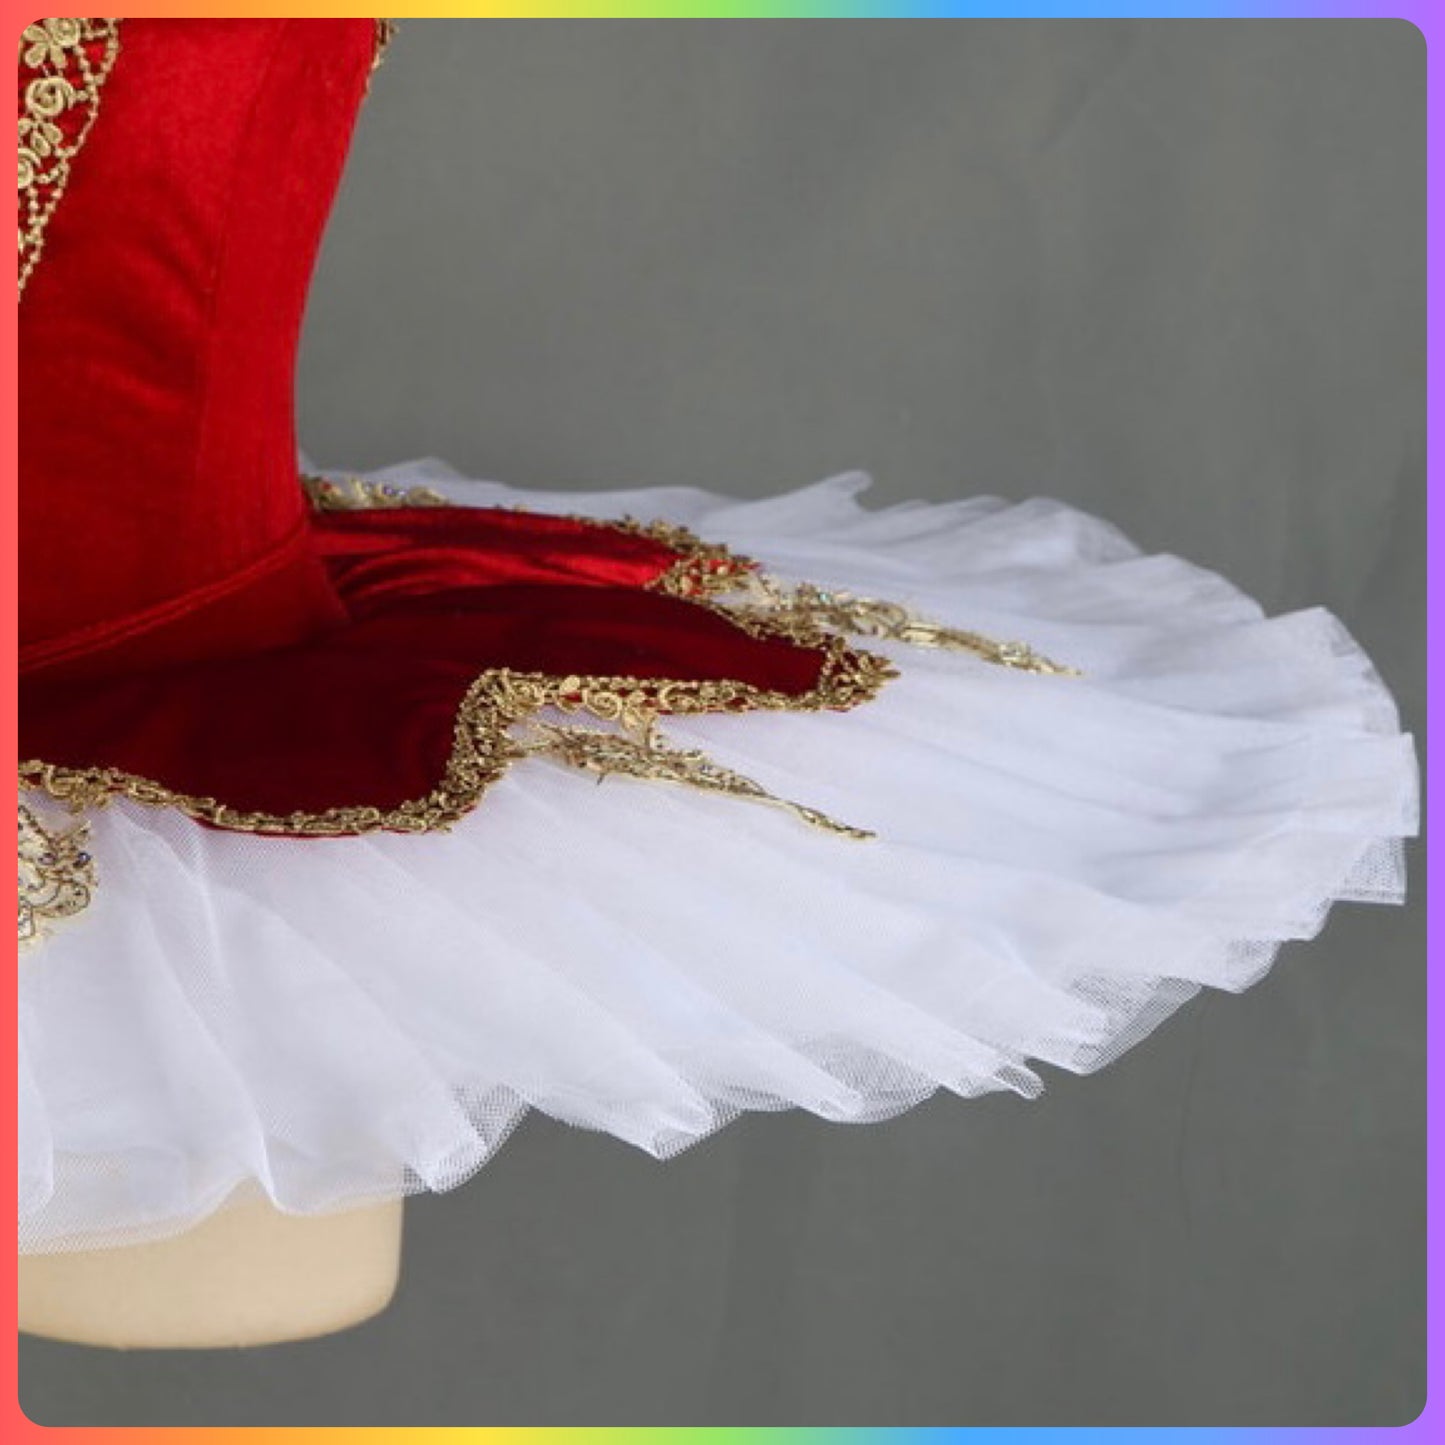 Off the Shoulder Velvet Professional Ballet Pancake Tutu in Red or Purple (Child & Adult Sizes)